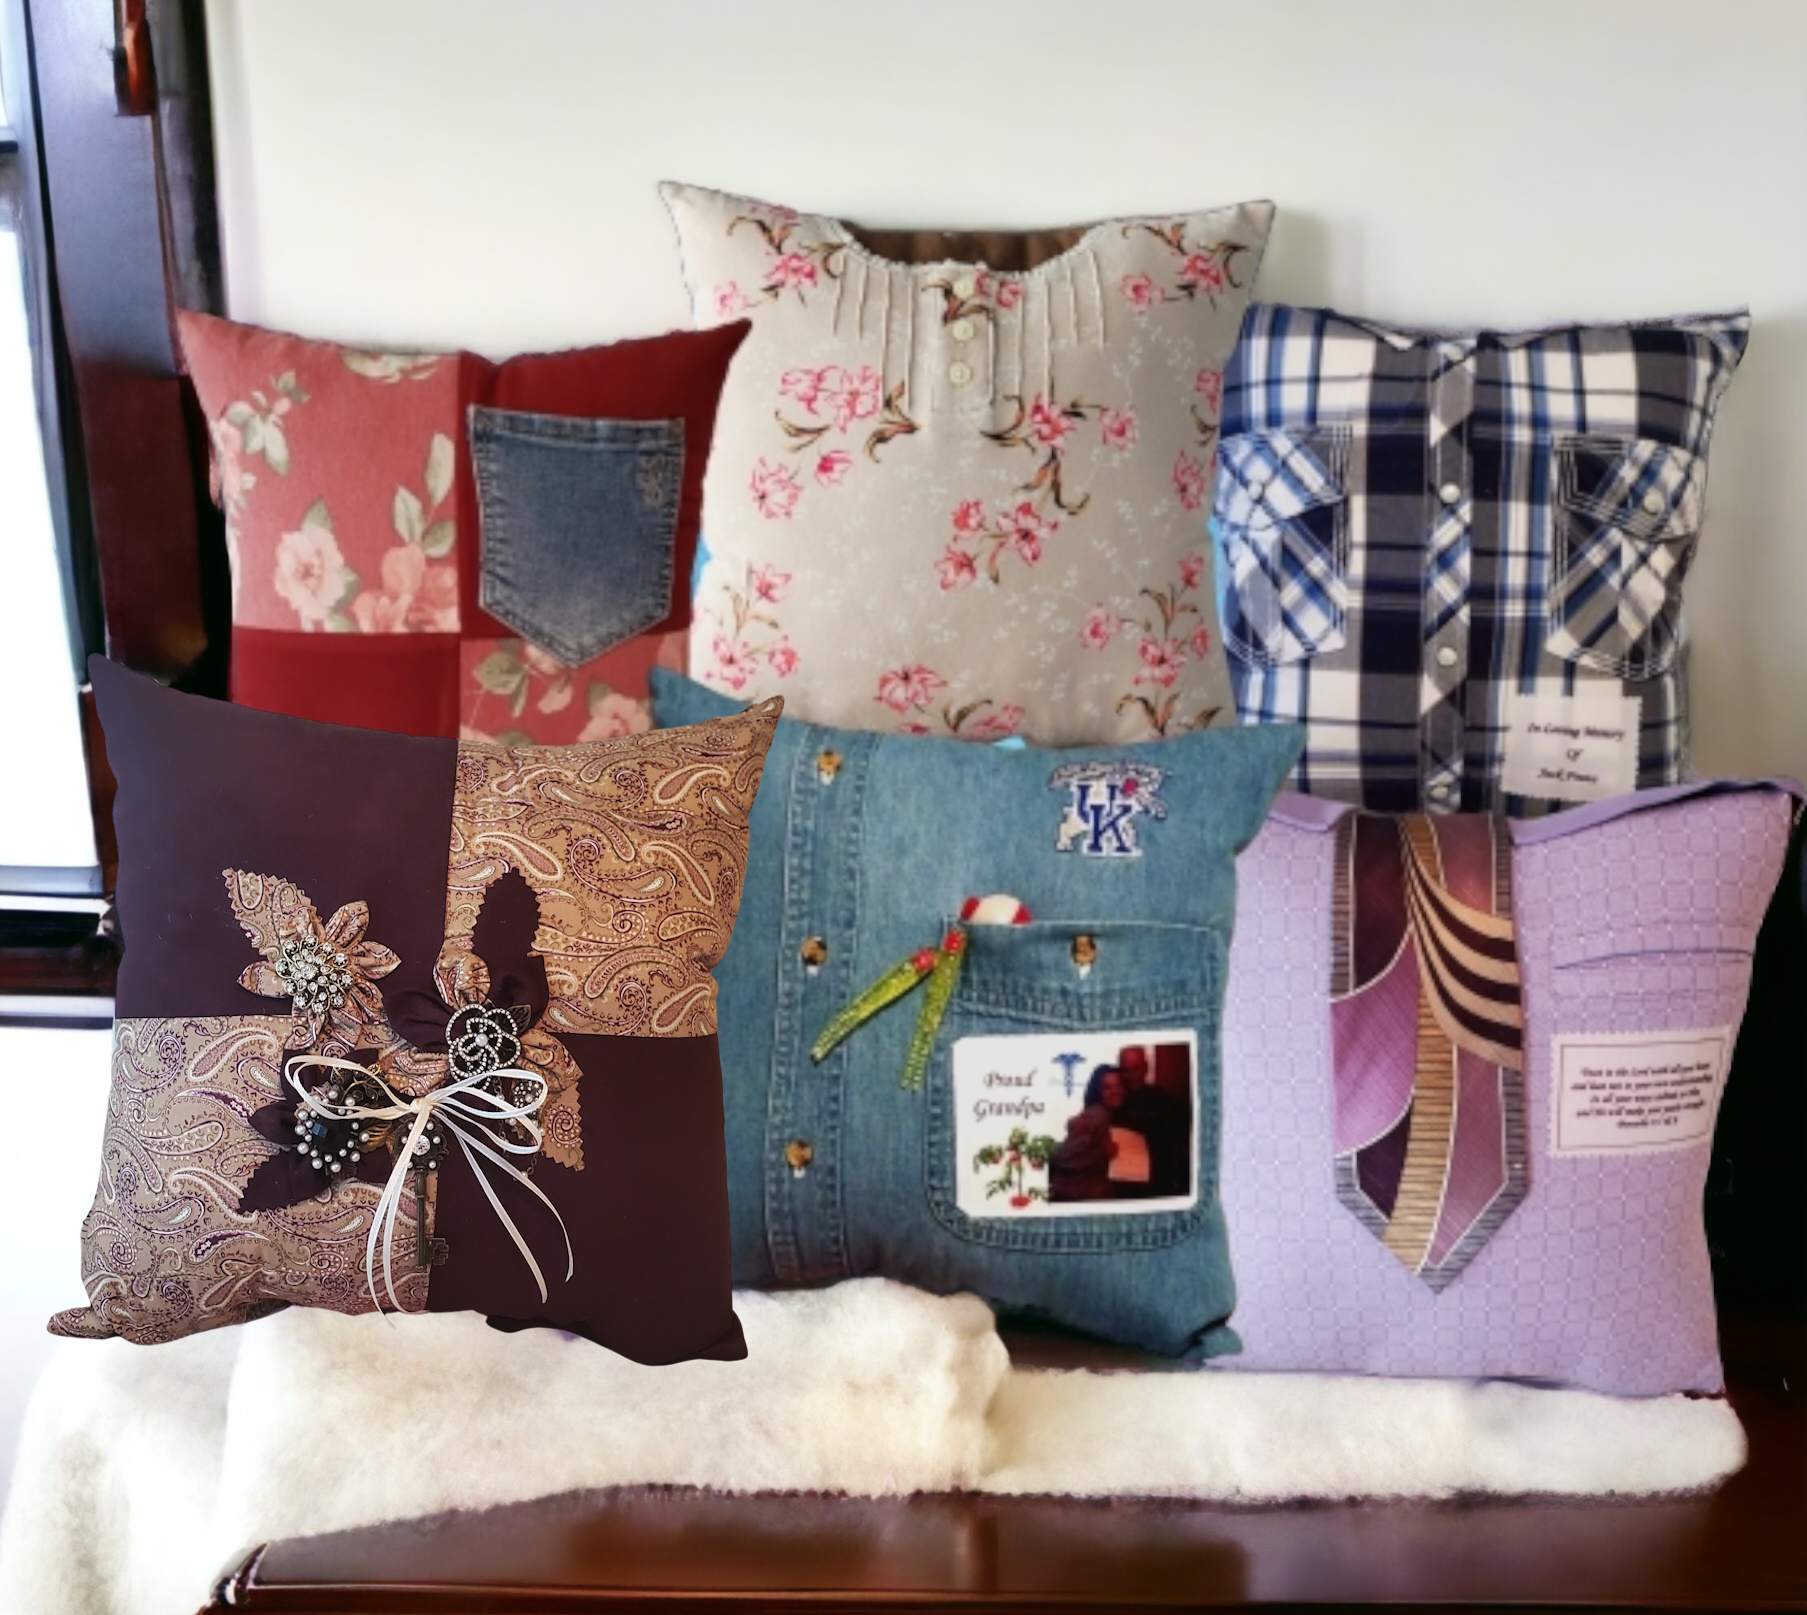 Couple Pillow, Custom Photo Pillows, Anniversary Gift, Valentine